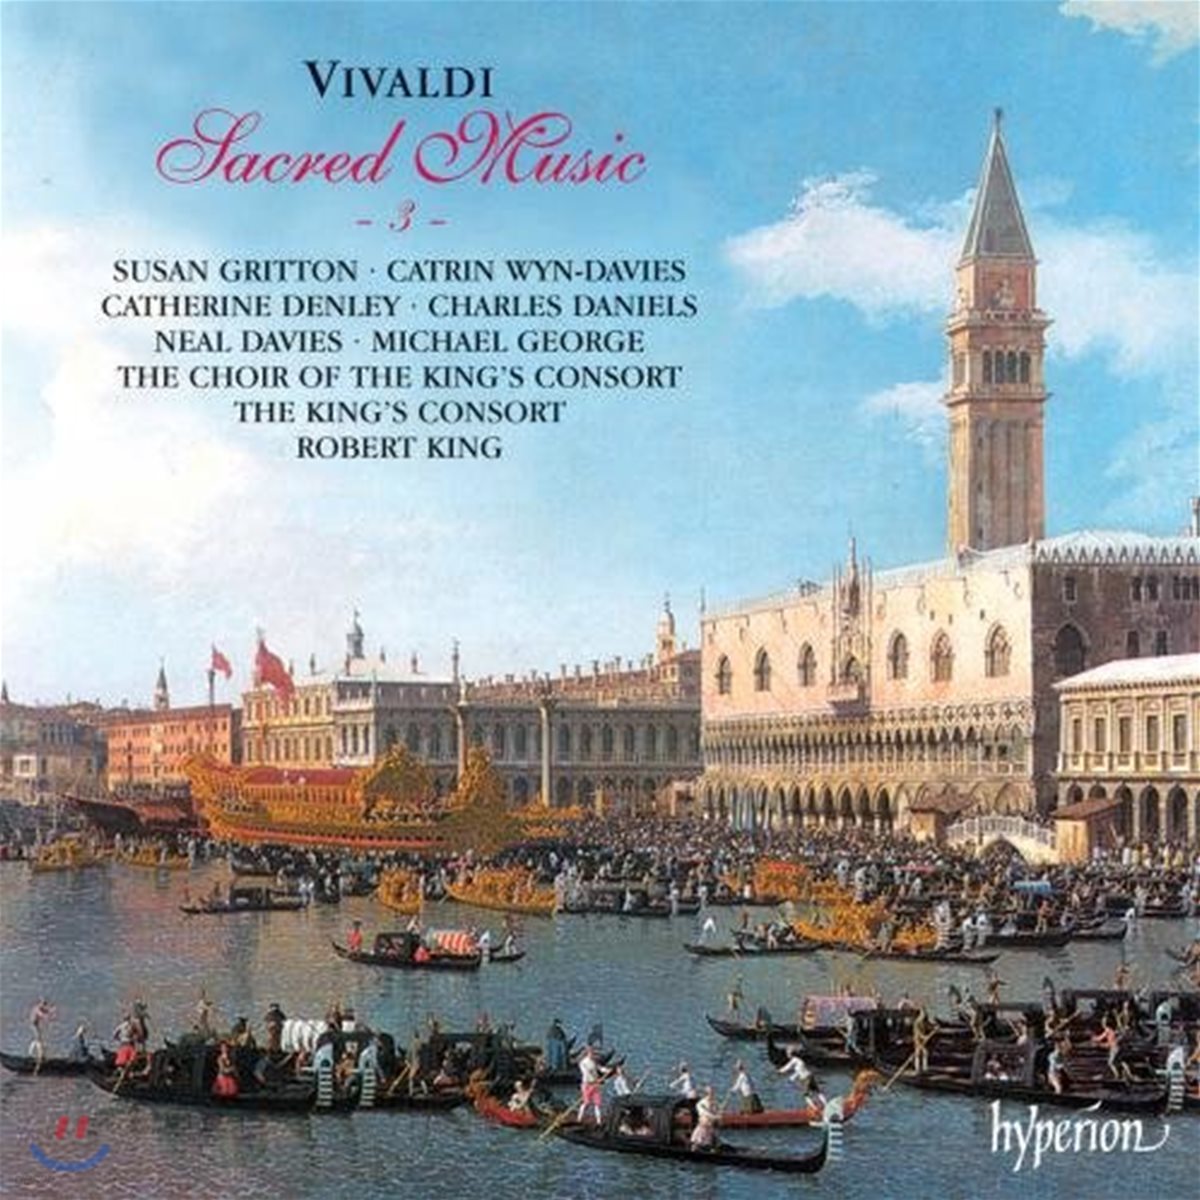 King's Consort 비발디: 종교 음악 3권 (Vivaldi: Sacred Music 3)